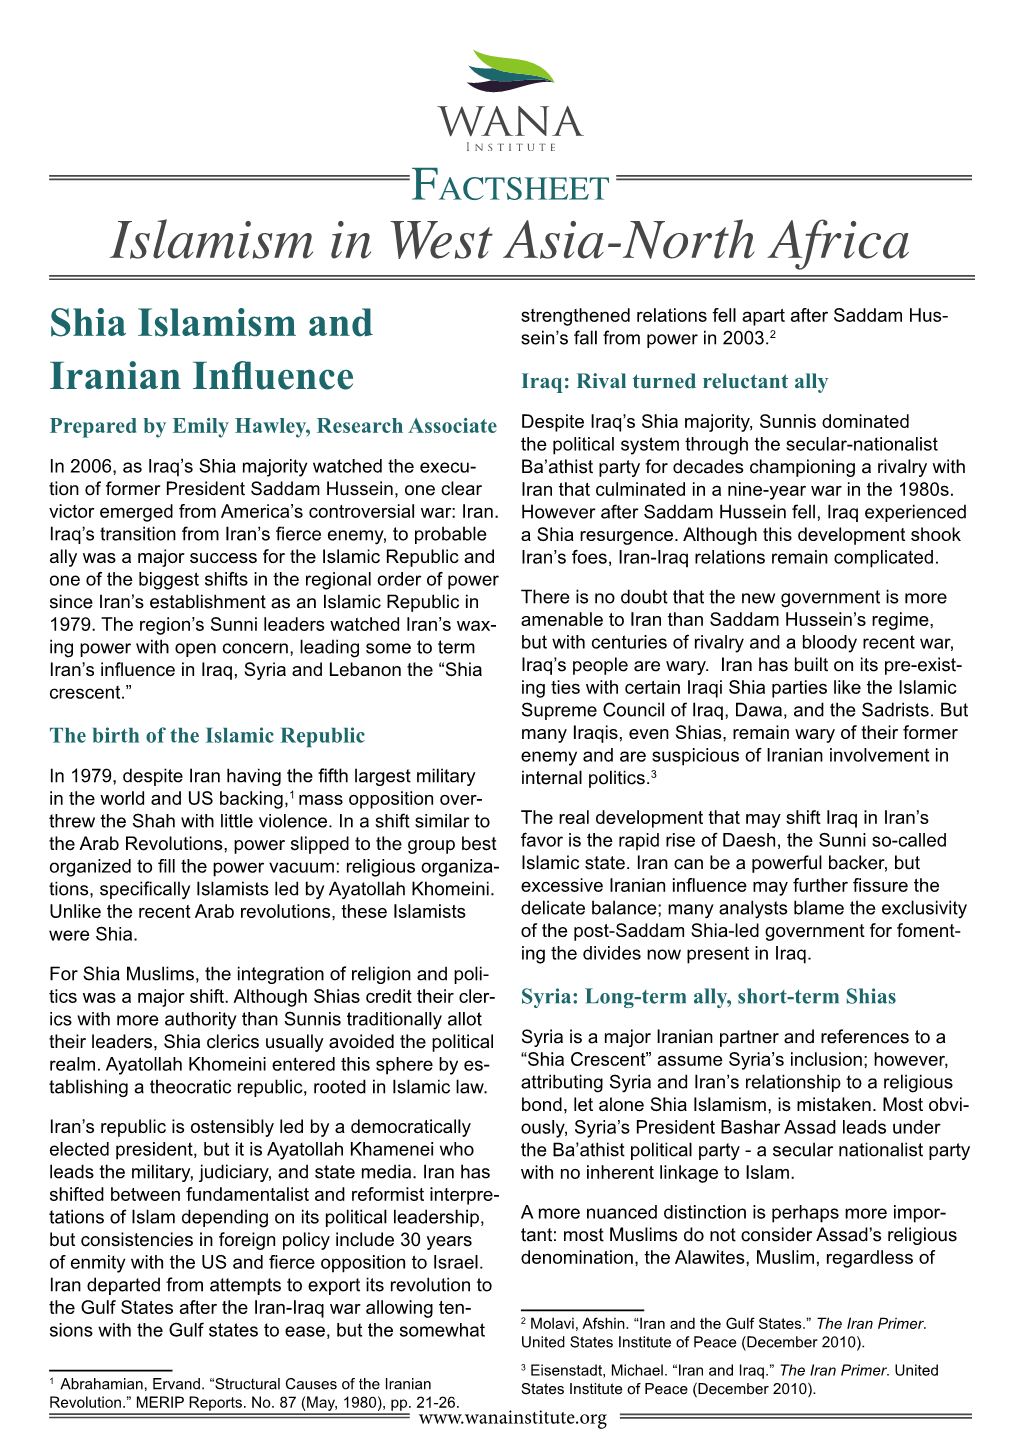 Shia Islamism and Iranian Influence